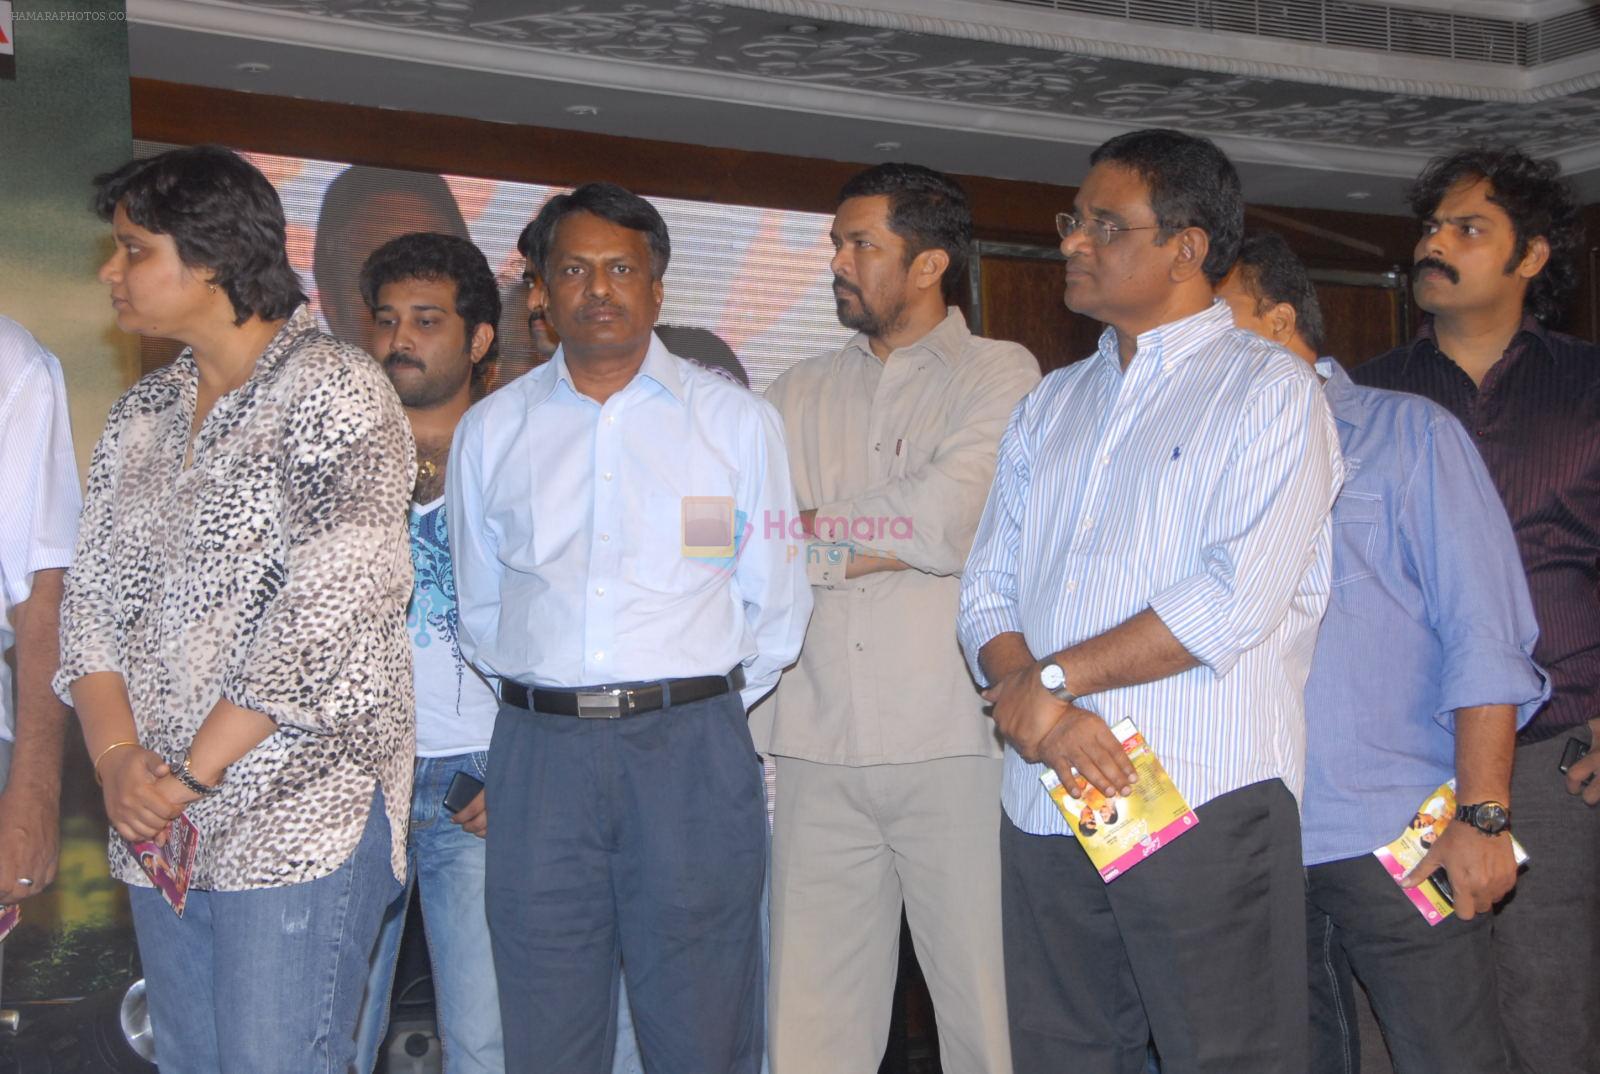 Mahankali Movie Audio Release on 22nd October 2011